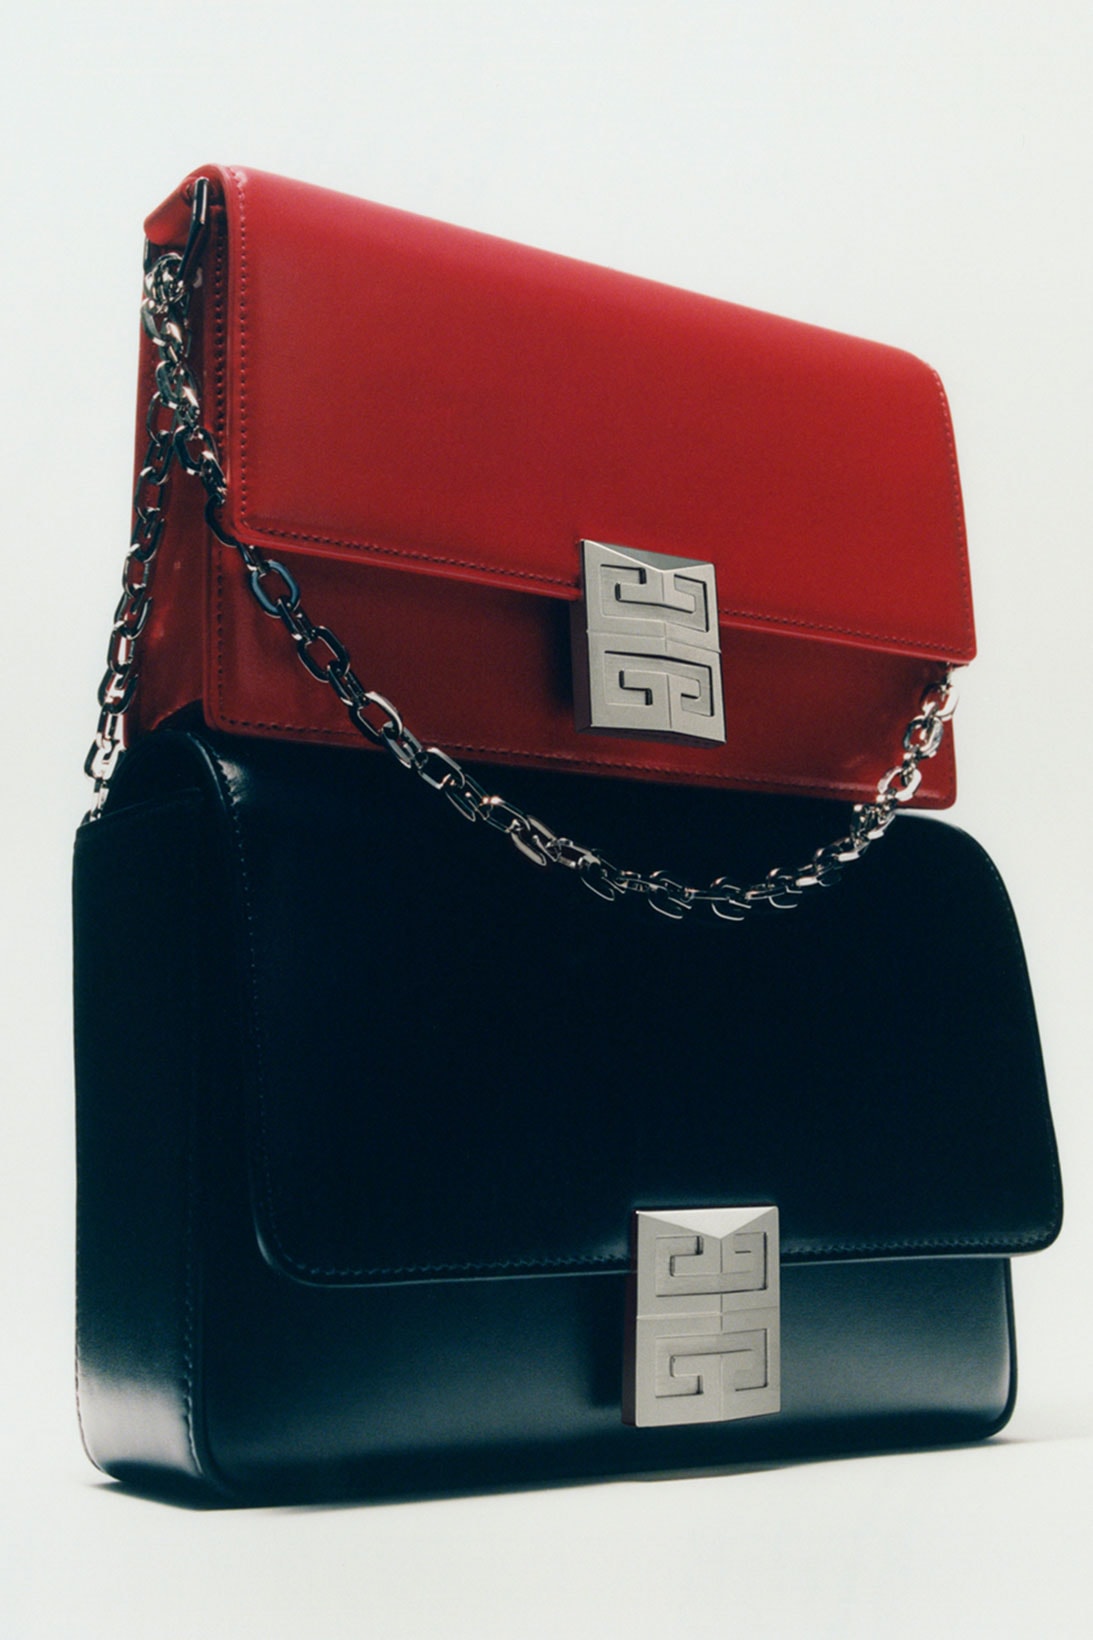 givenchy matthew williams 4g handbag purse design red black chain strap